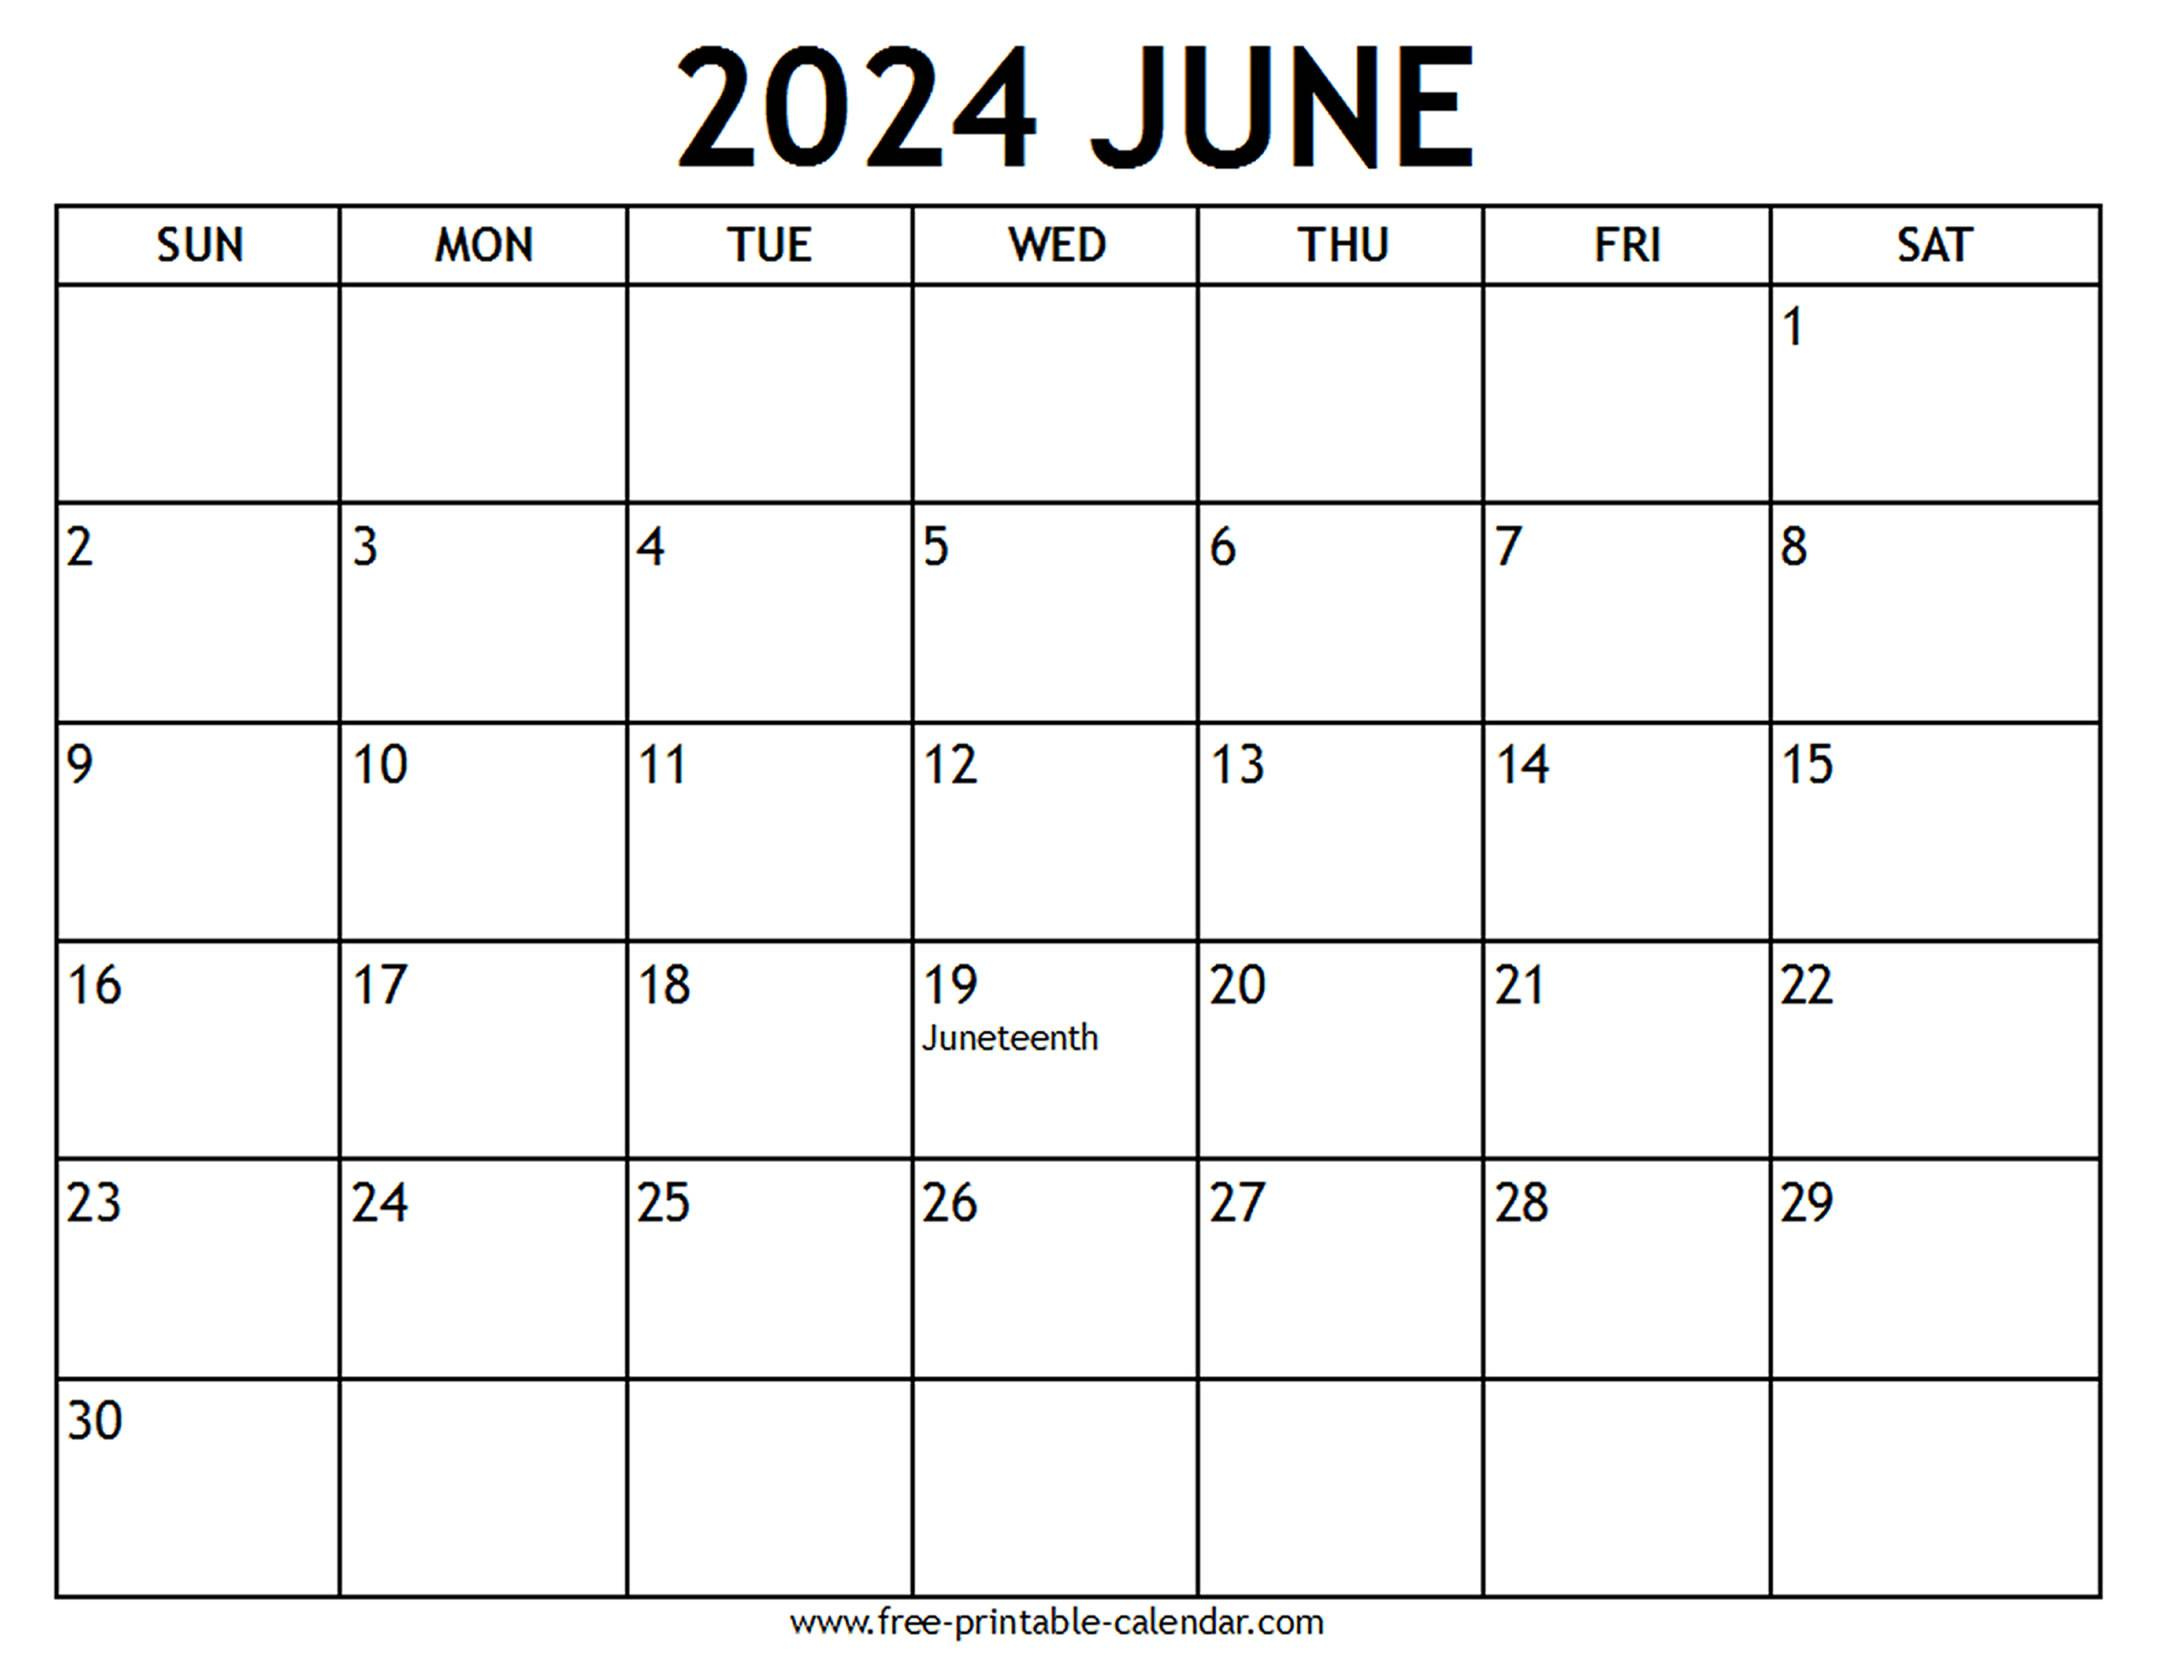 June 2024 Calendar Us Holidays - Free-Printable-Calendar regarding Holidays In June 2024 Calendar